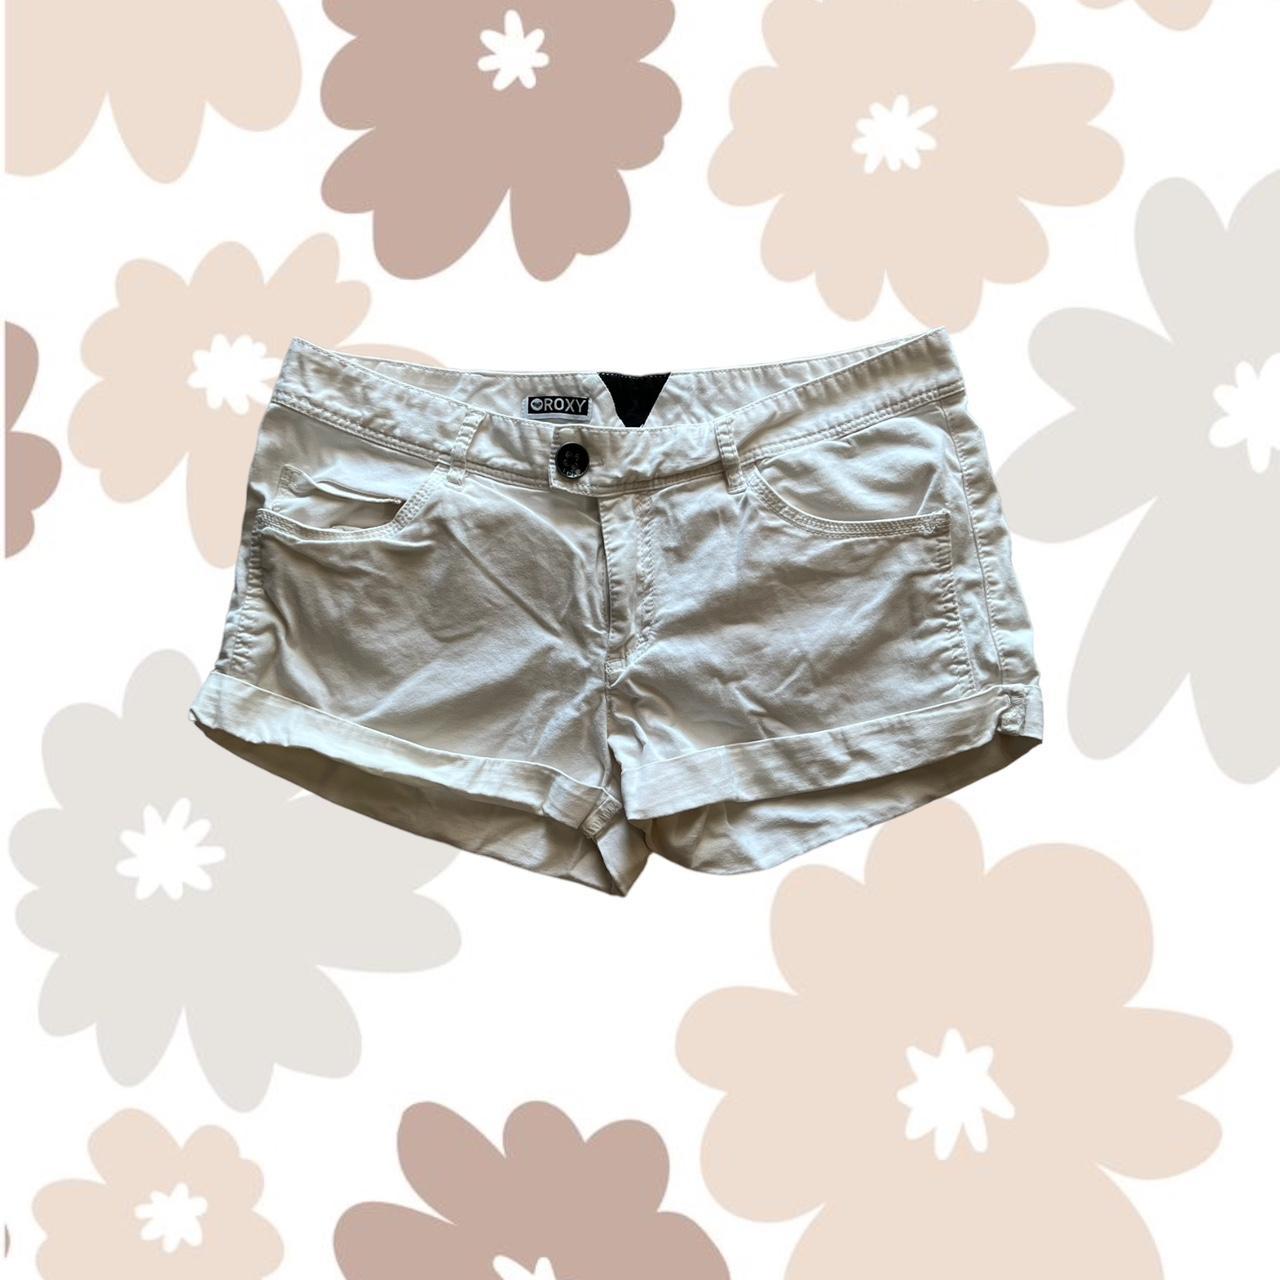 Roxy Women's Tan and White Shorts